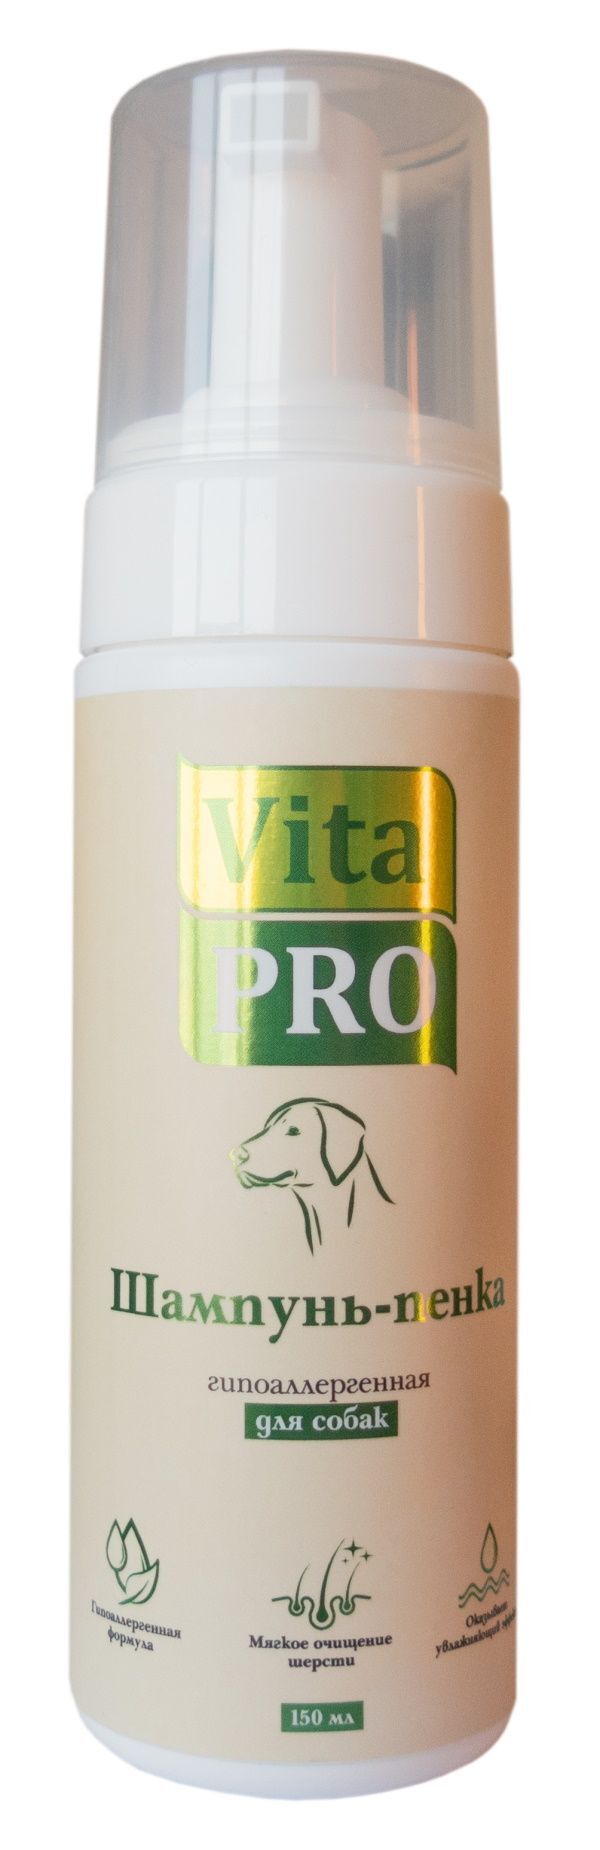 Vita Pro 150 мл шампунь-пенка для собак гипоаллергенная 1х24